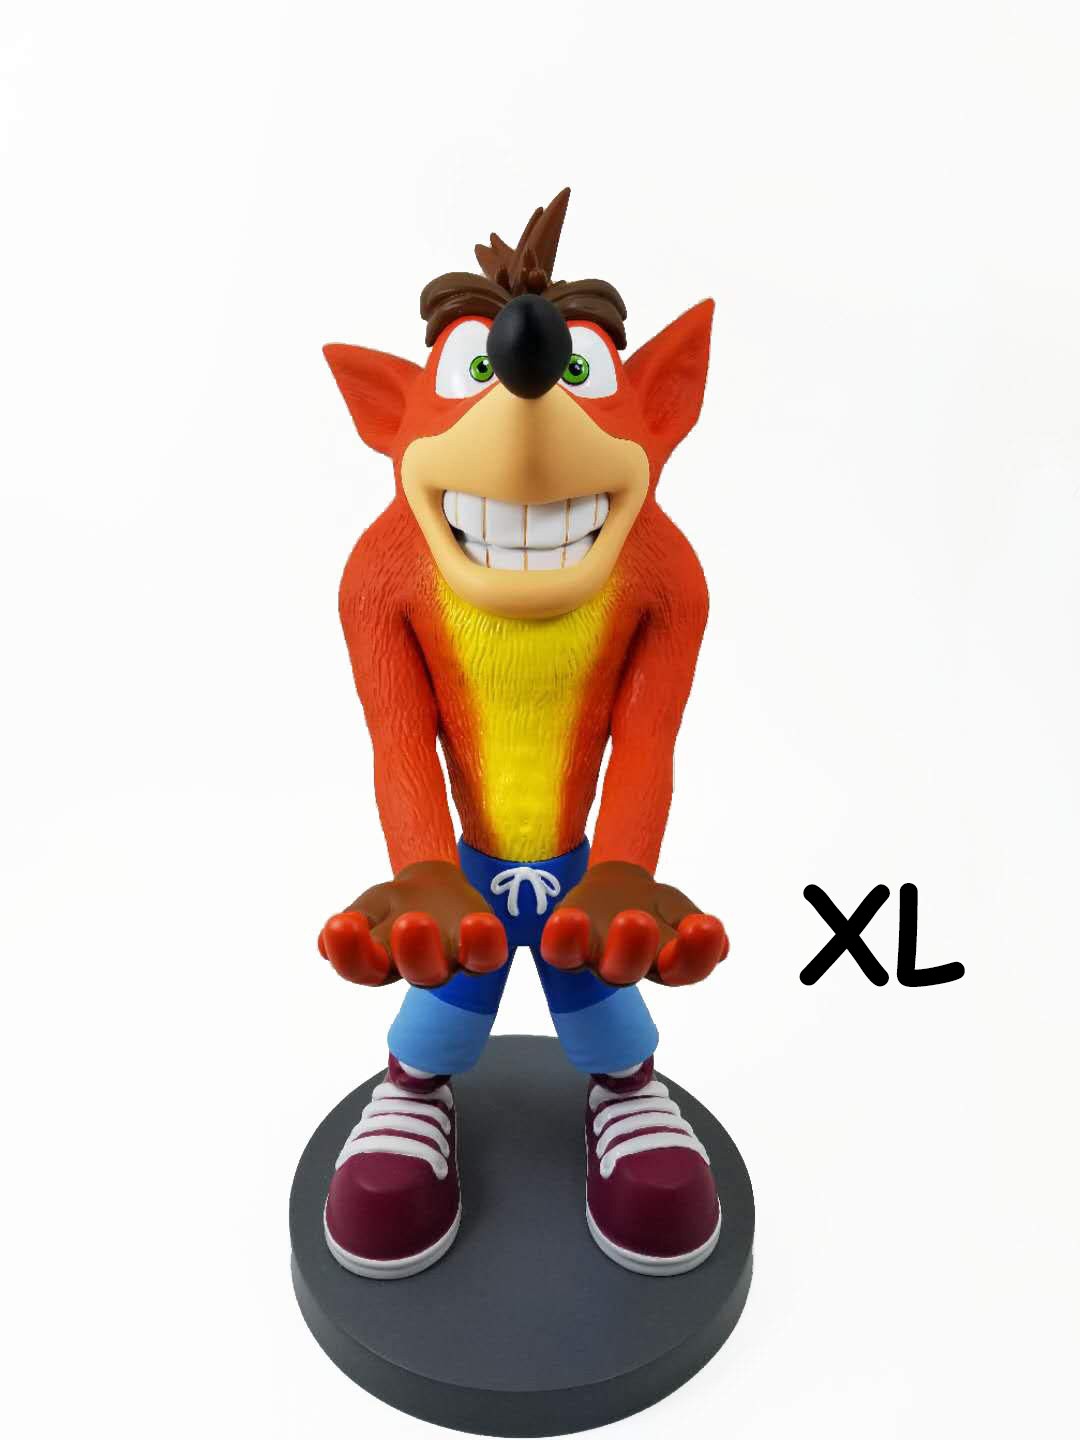 Crash Bandicoot Cable Guy (XL) stand